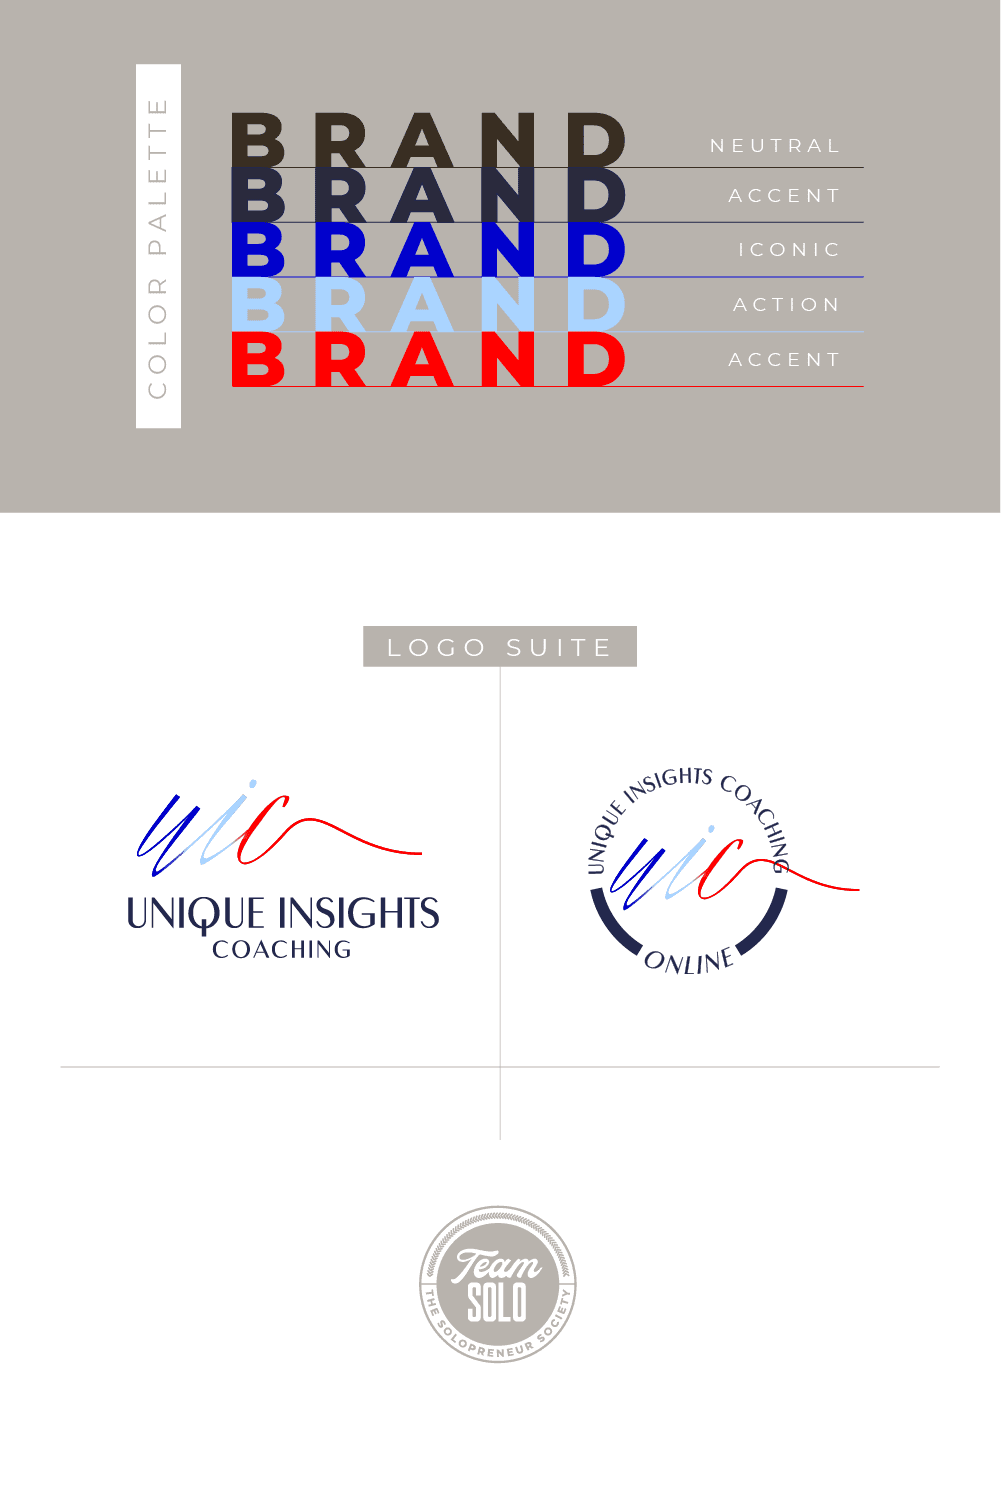 Unique Insights Coaching Logo Suite Design